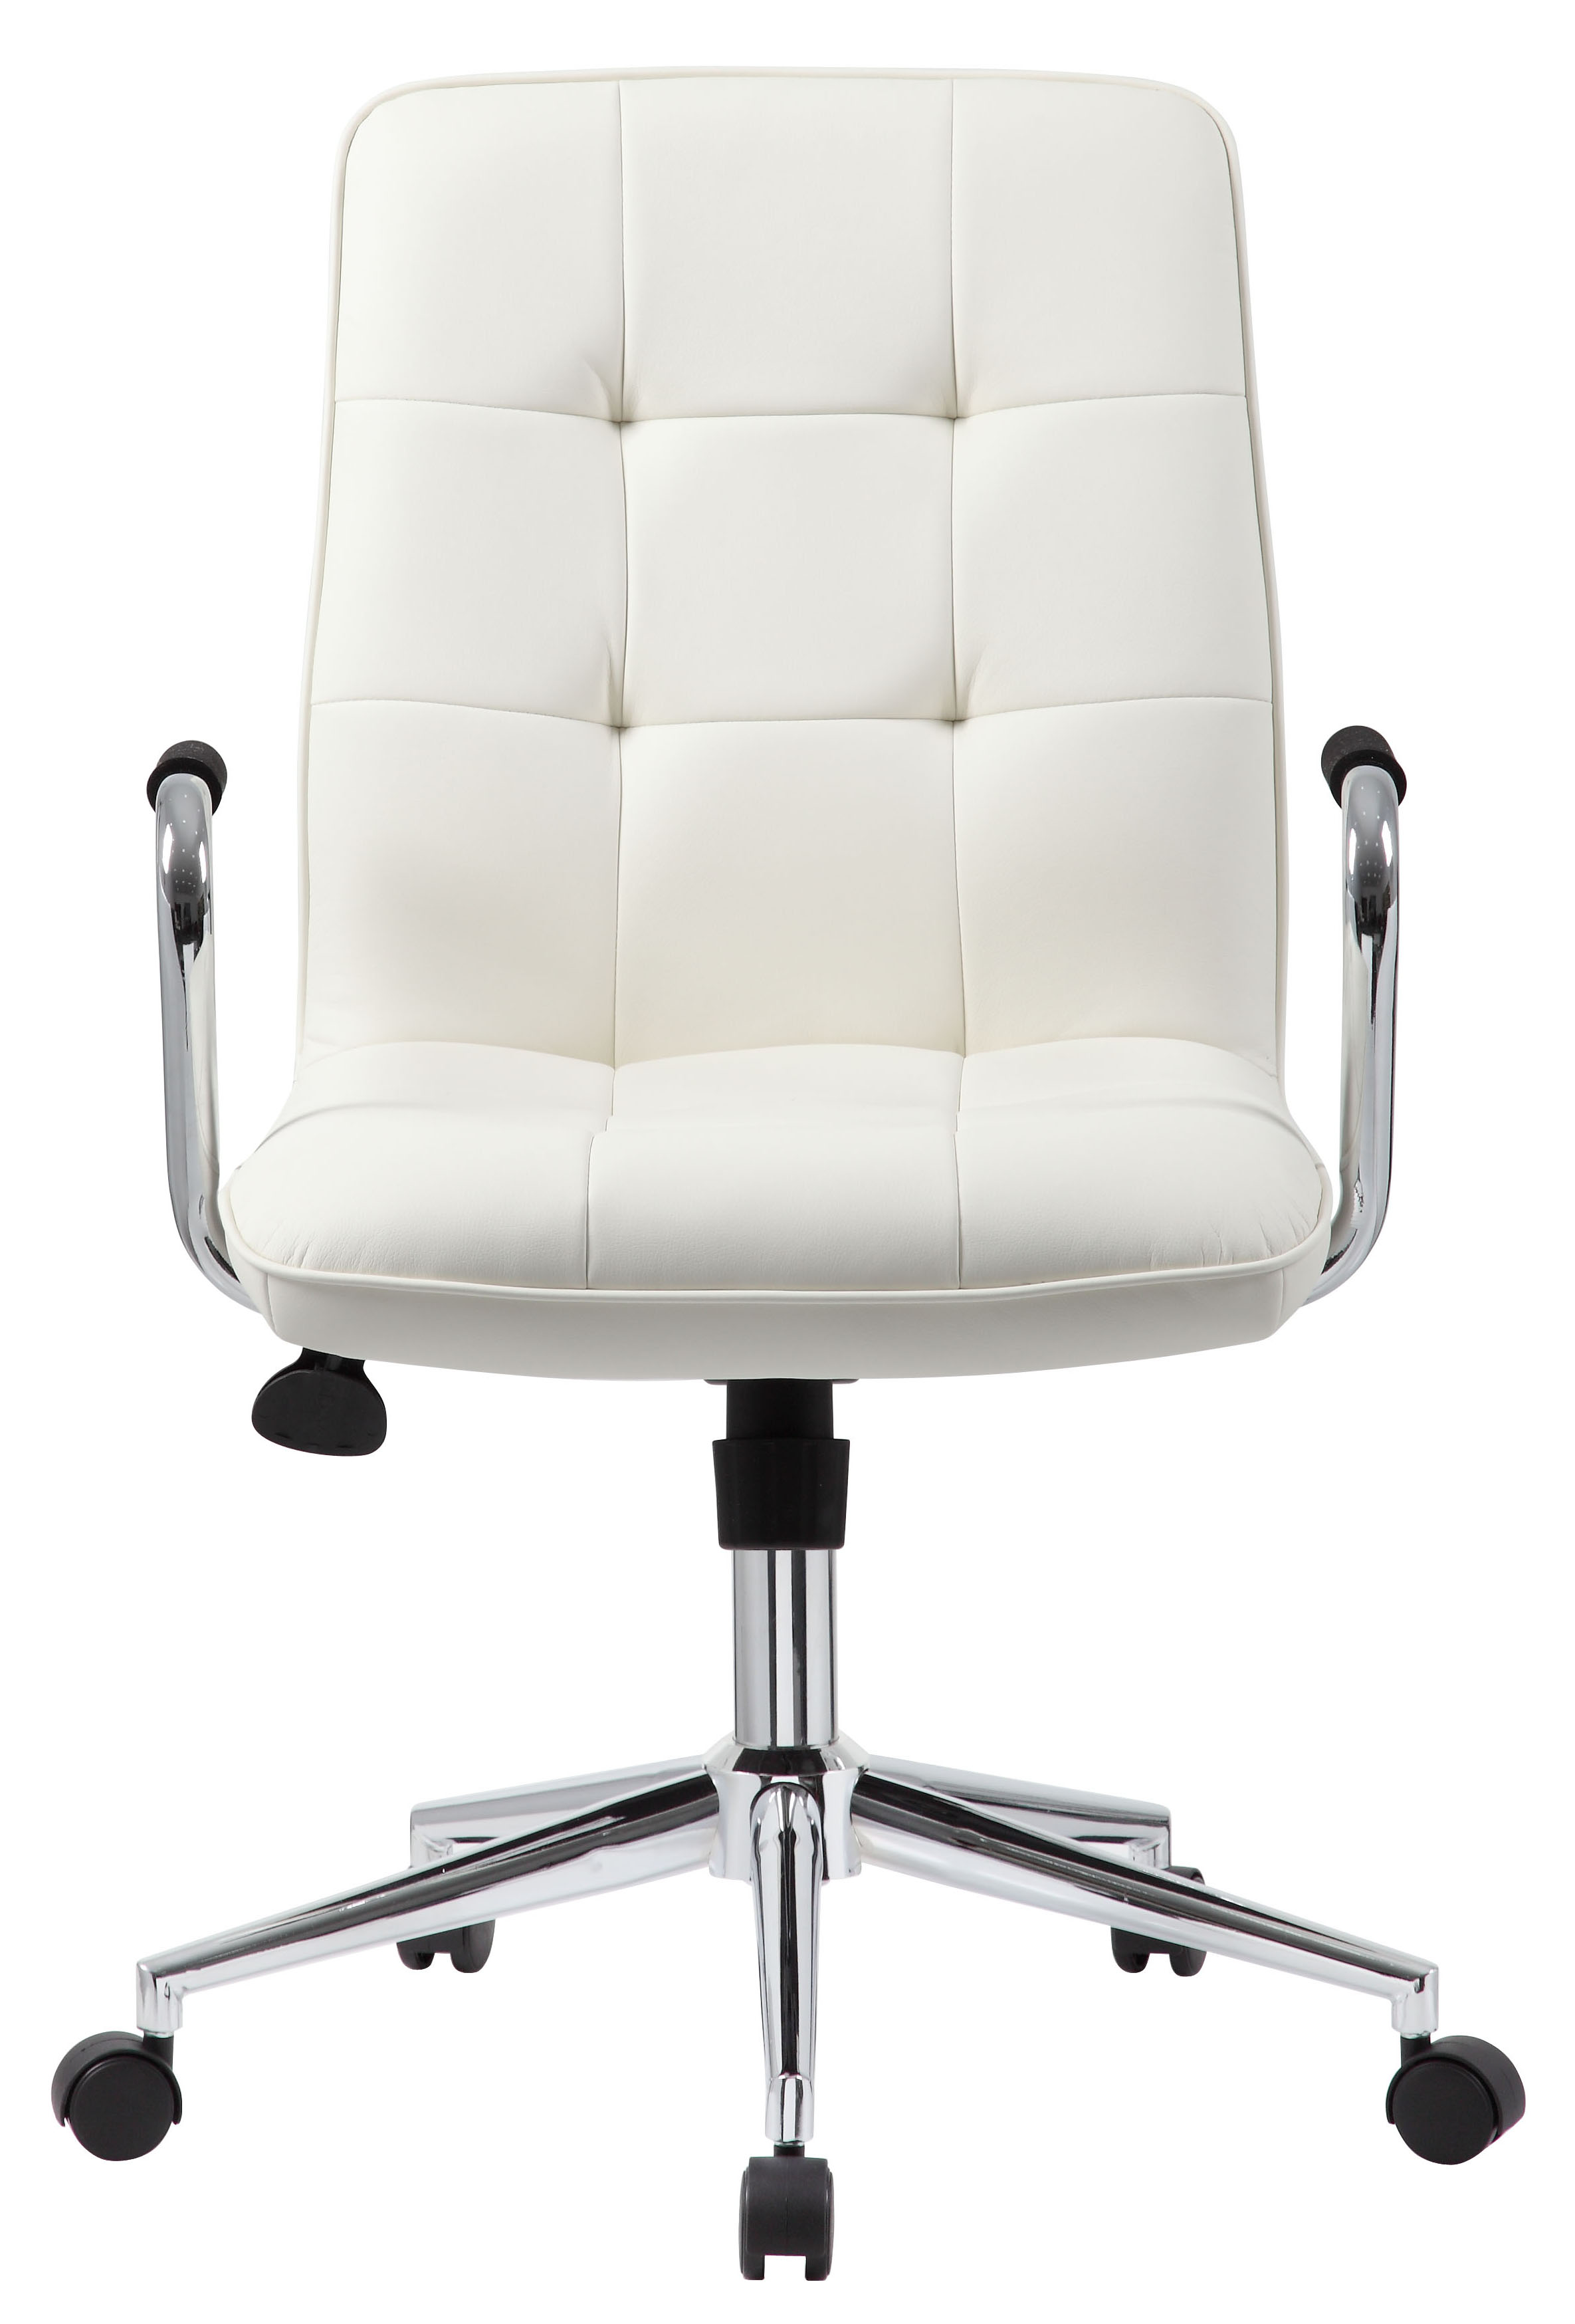 Modern Office Chair w/Chrome Arms White BossChair